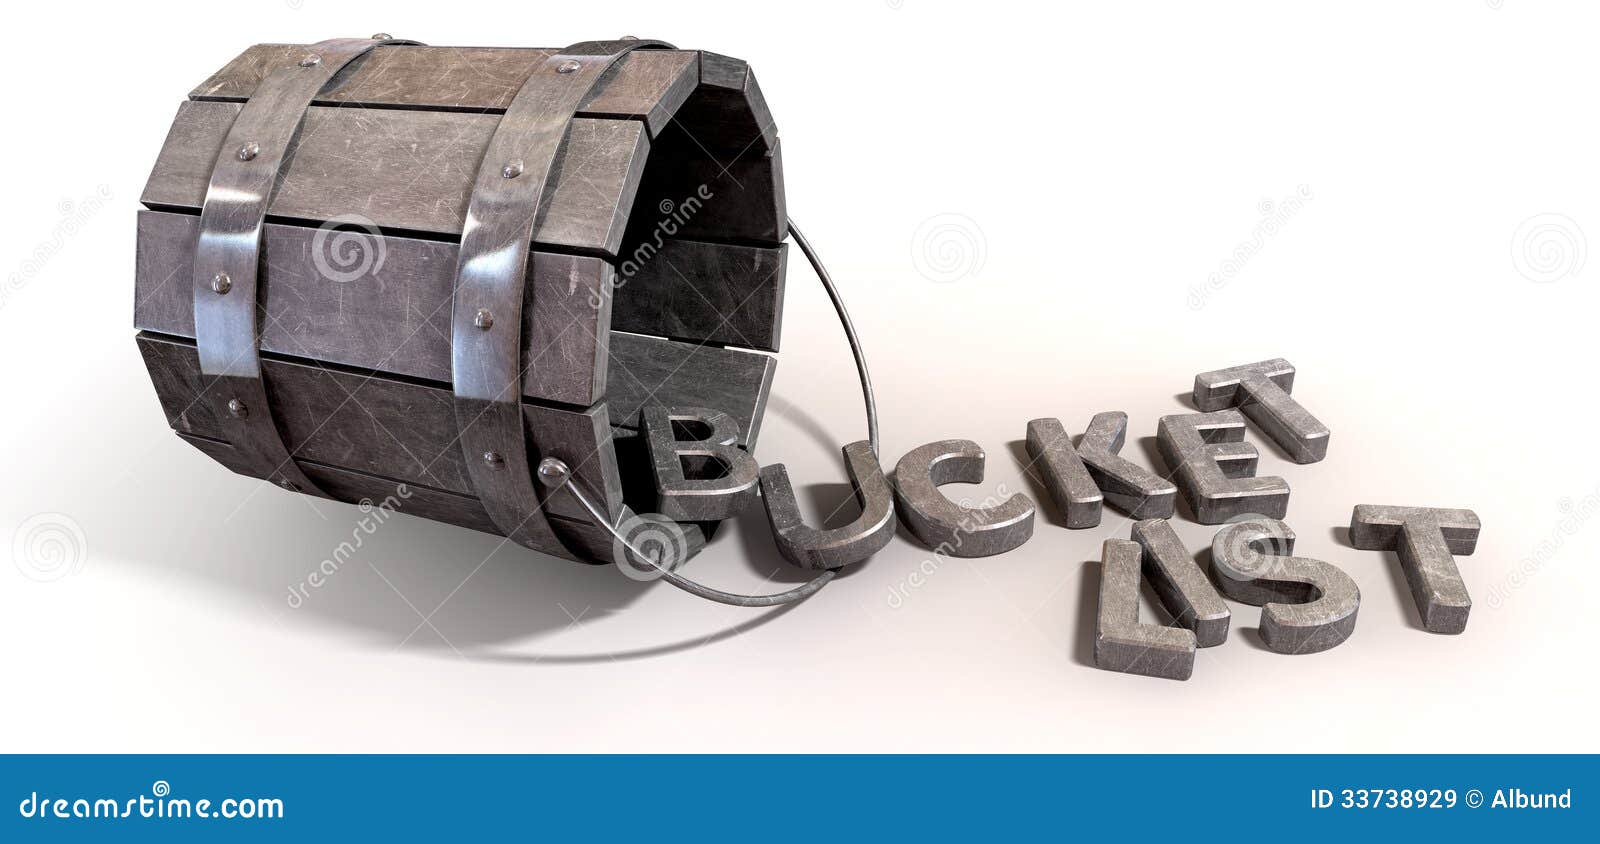 bucket of money clipart - photo #49